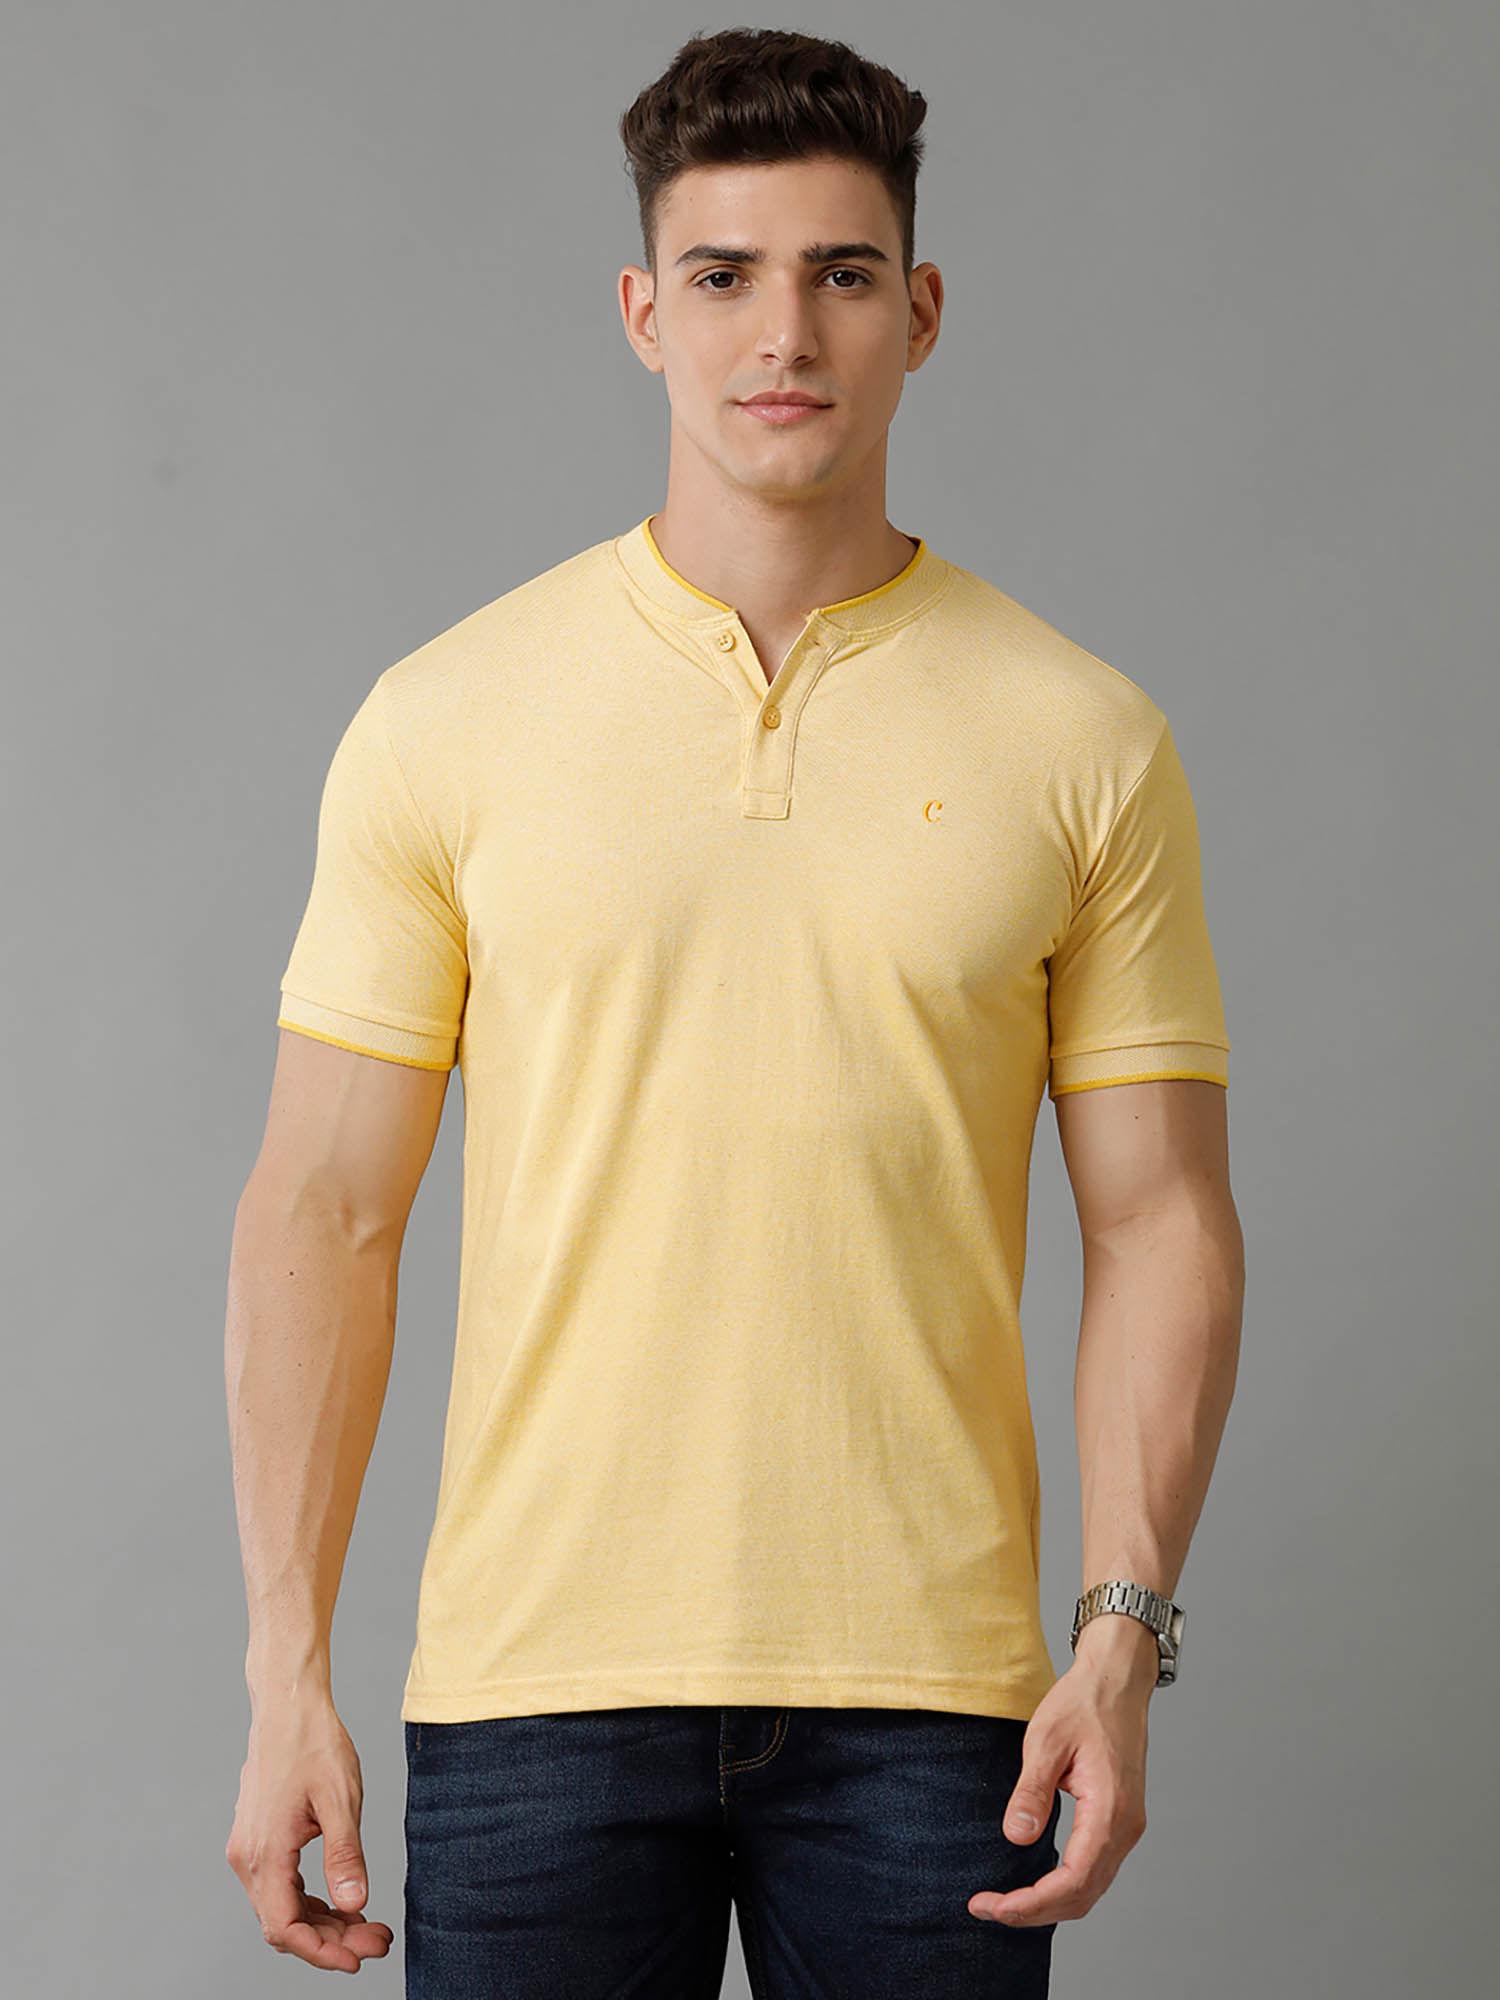 men's cotton linen yellow solid t-shirt